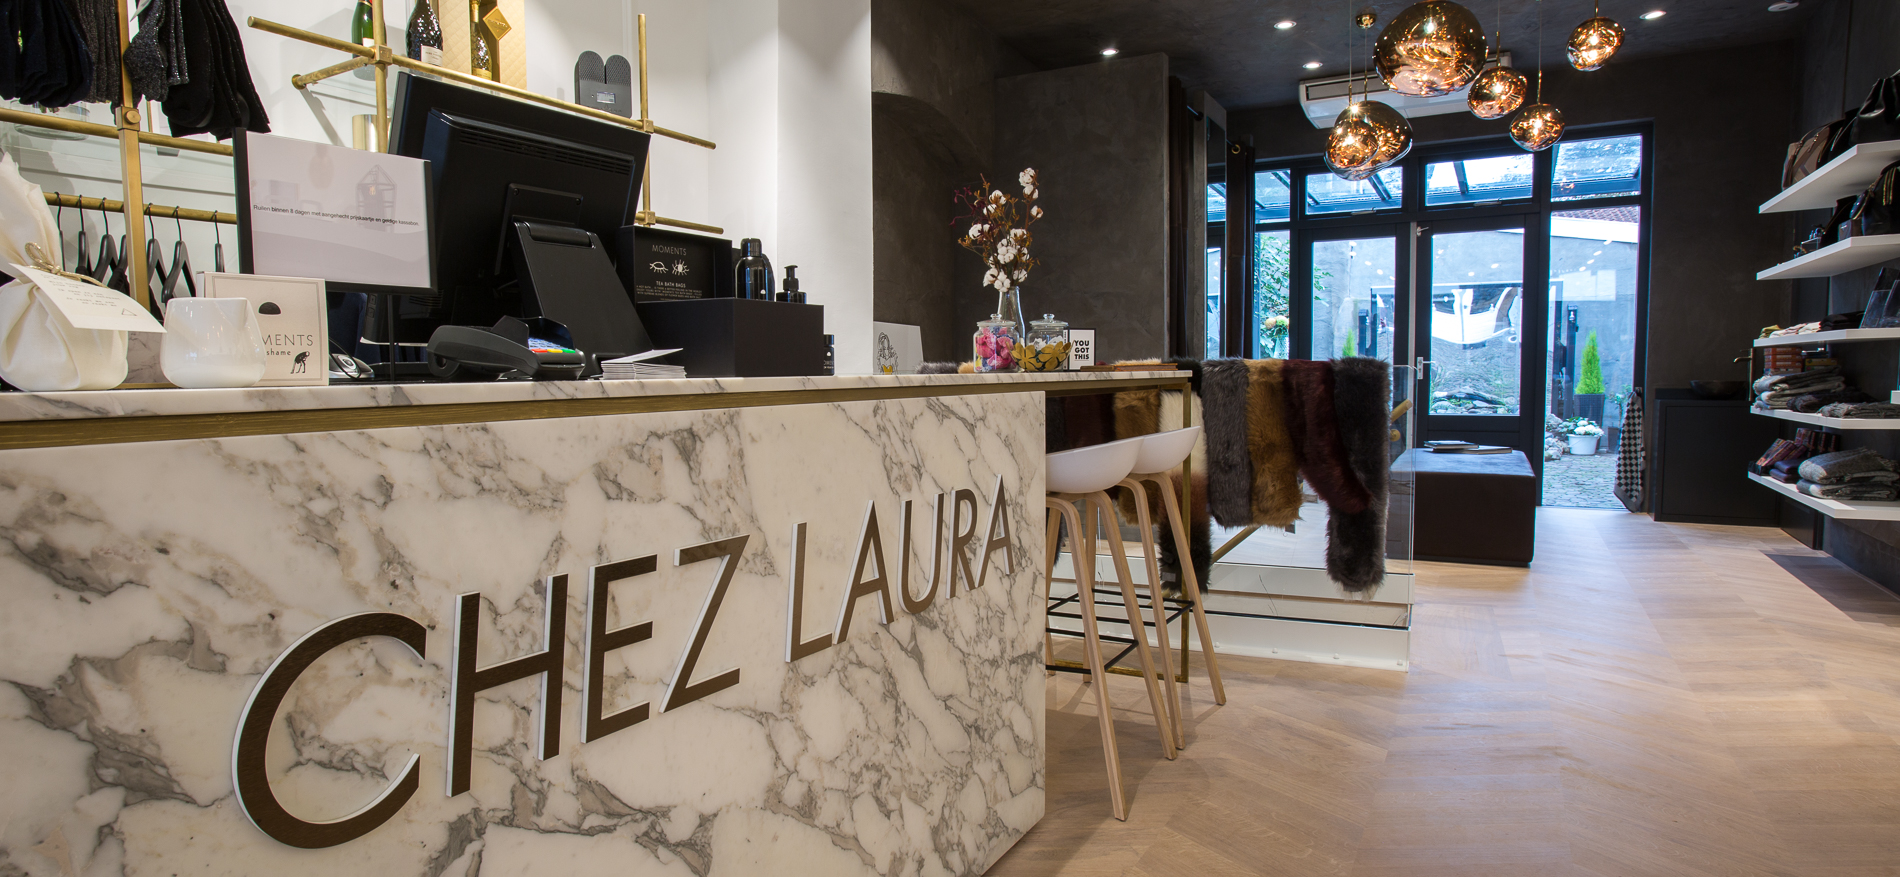 Chez Laura | Harderwijk (NL) - Fashion